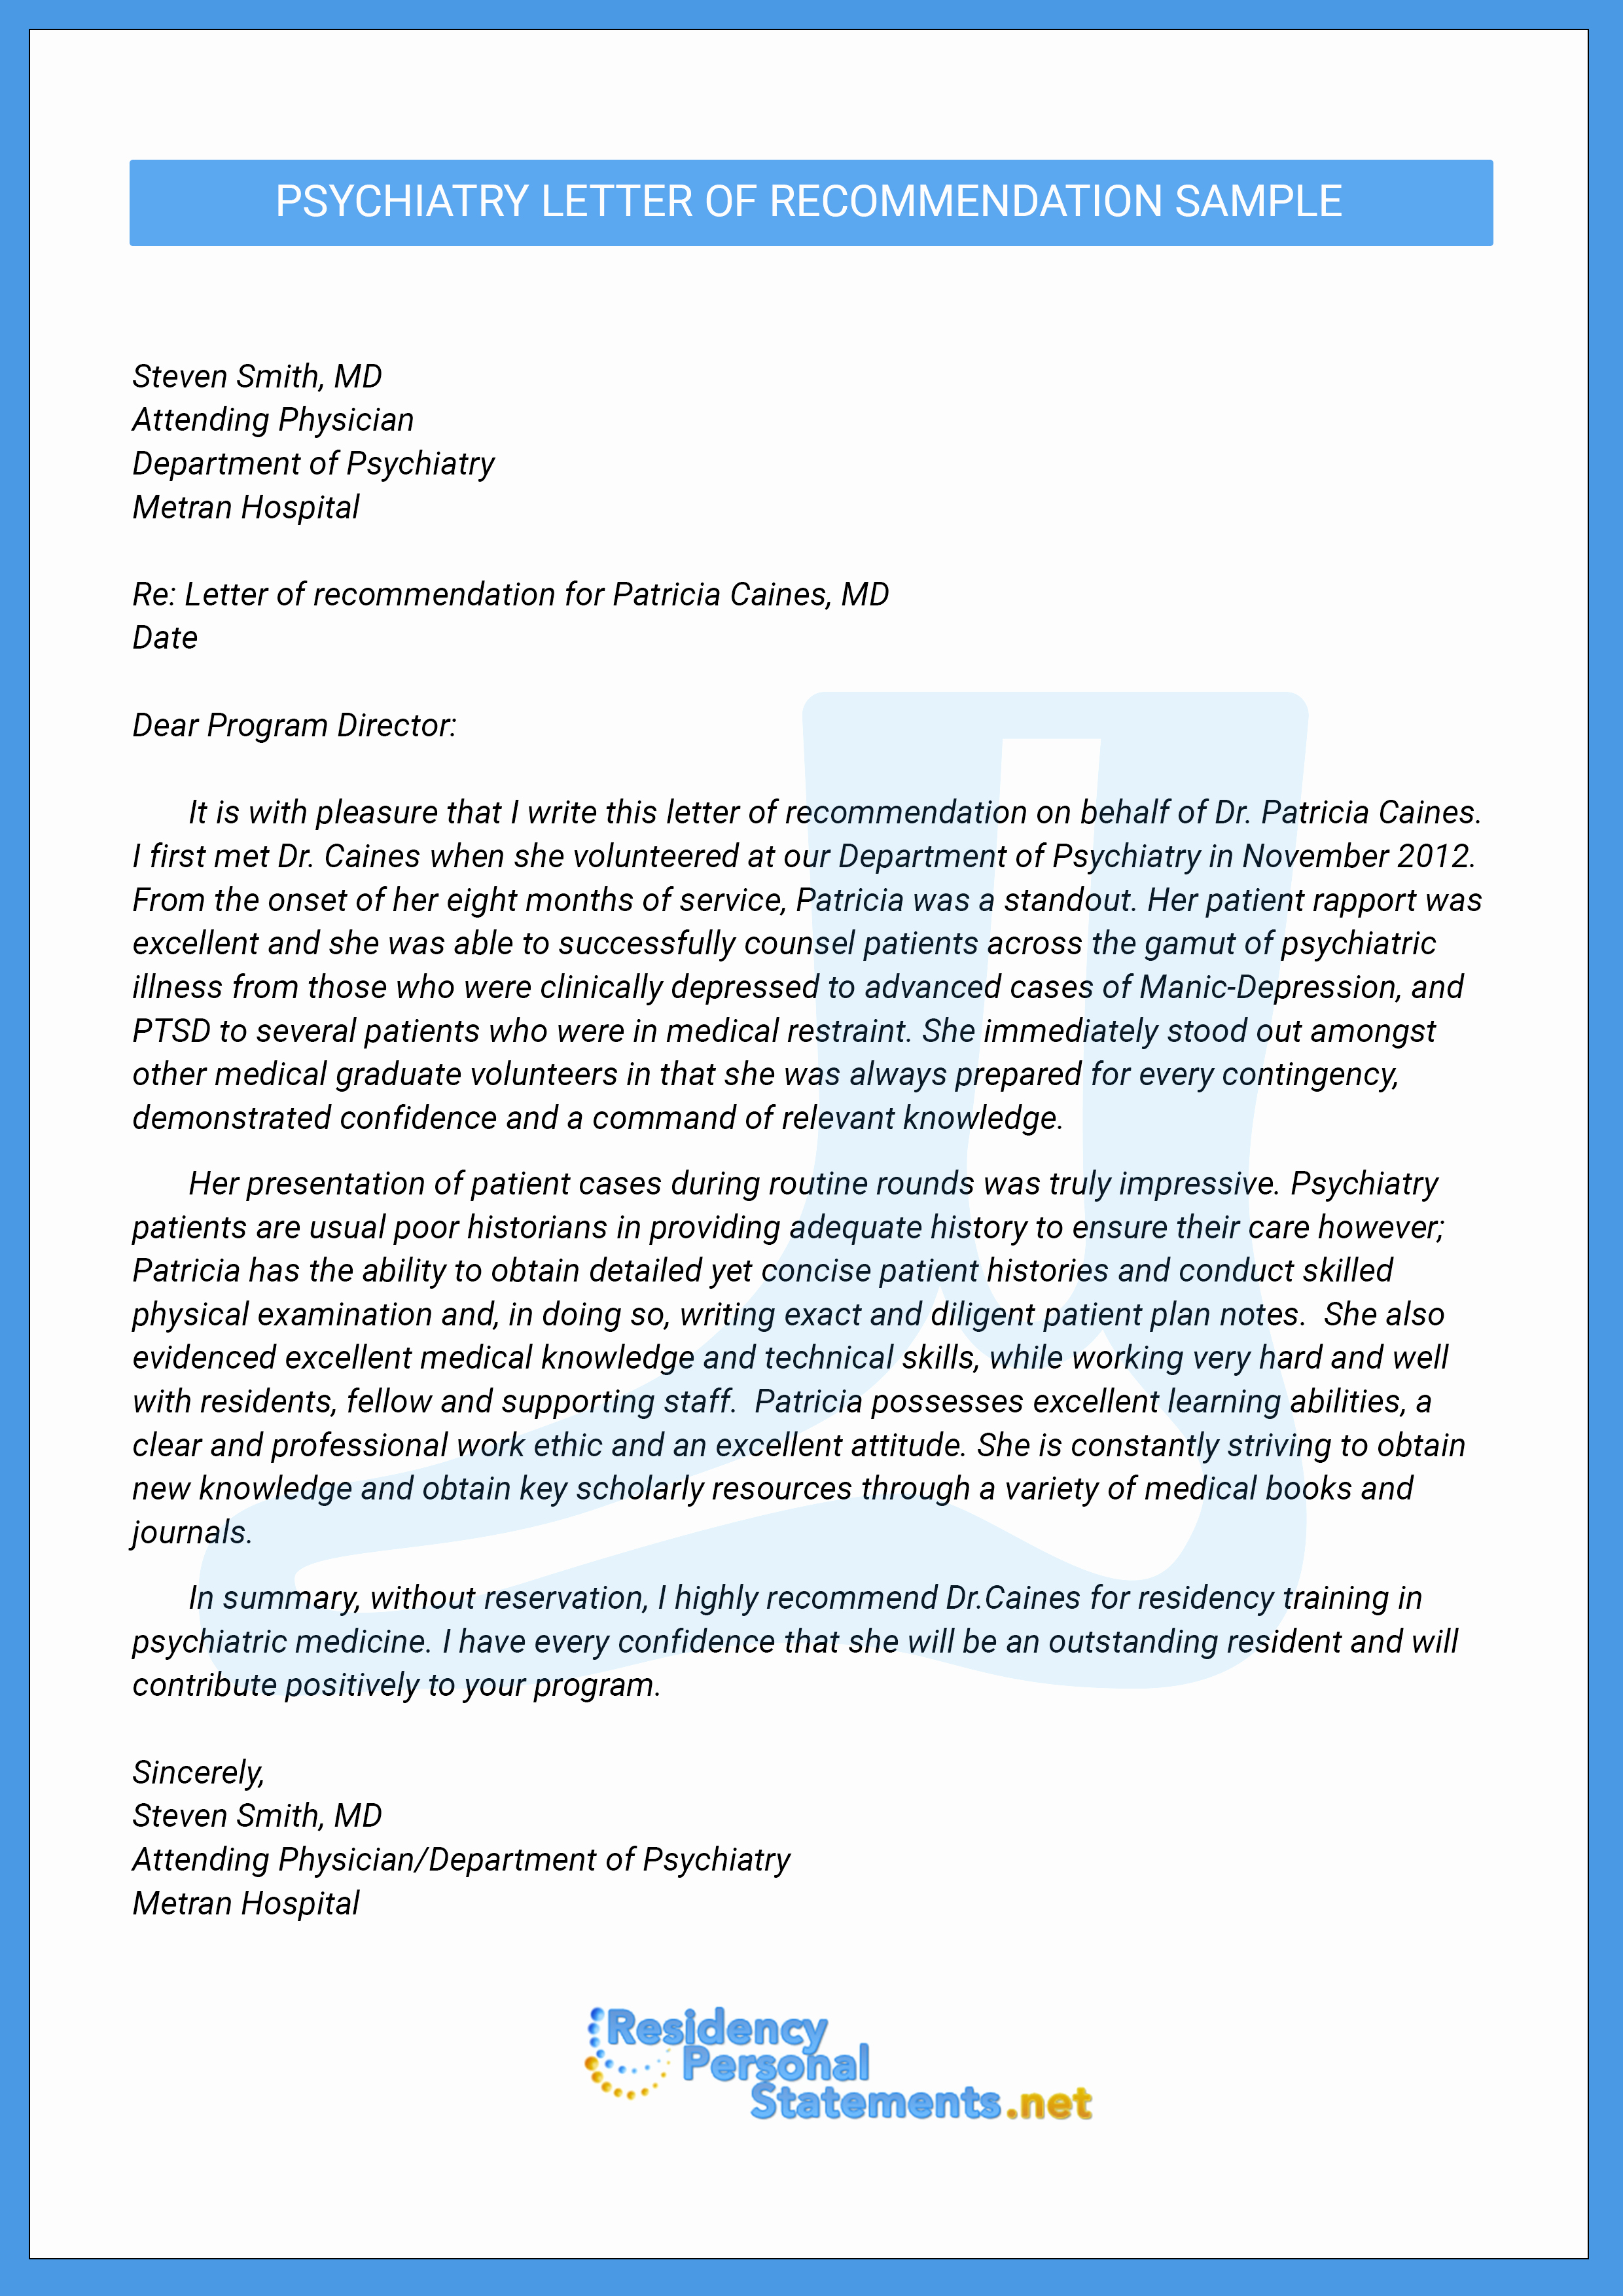 Internal Medicine Letter Of Recommendation Fresh Psychiatry Residency Letter Of Re Mendation Sample